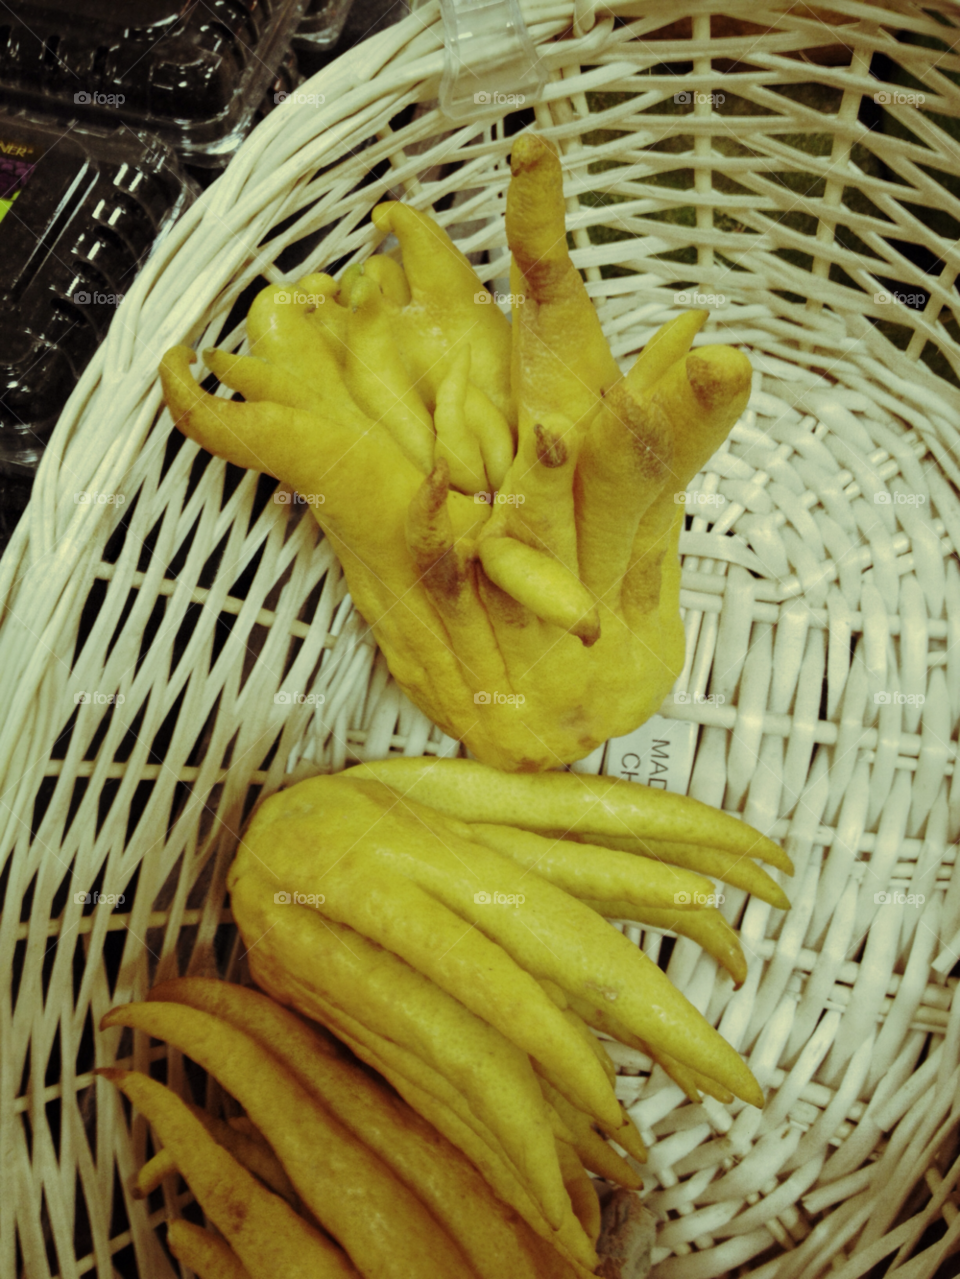 yellow fruit basket buddha hand by clevonian